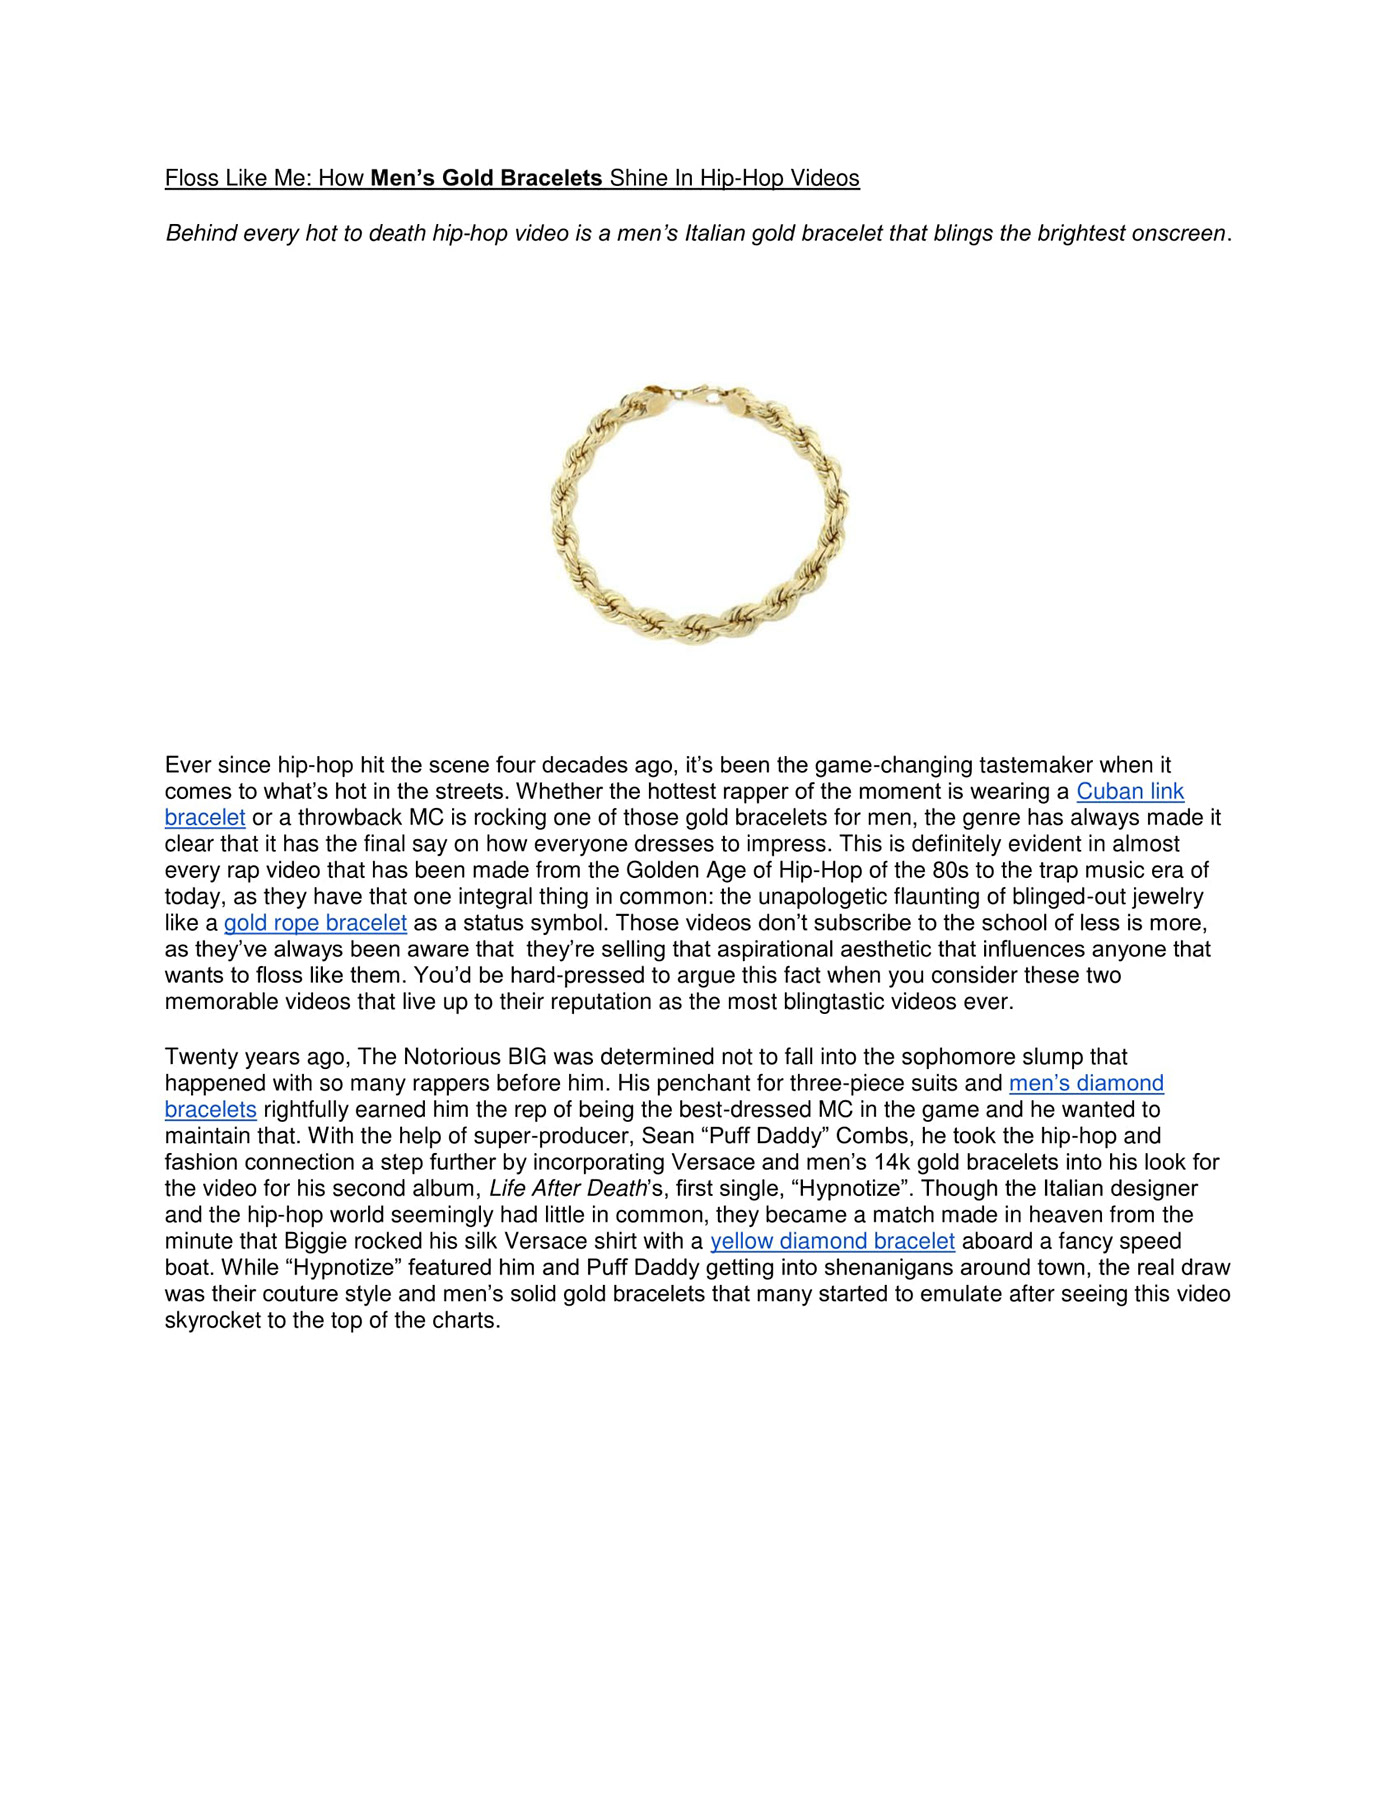 jewelry hip hop TRENDING strategy press release trends content creation Blog Website сео